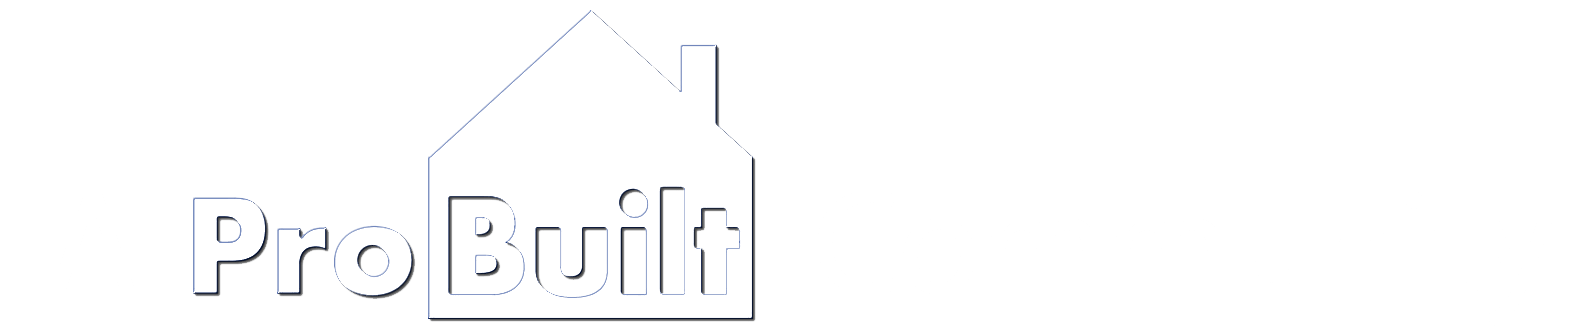 Pro Built Homes Logo